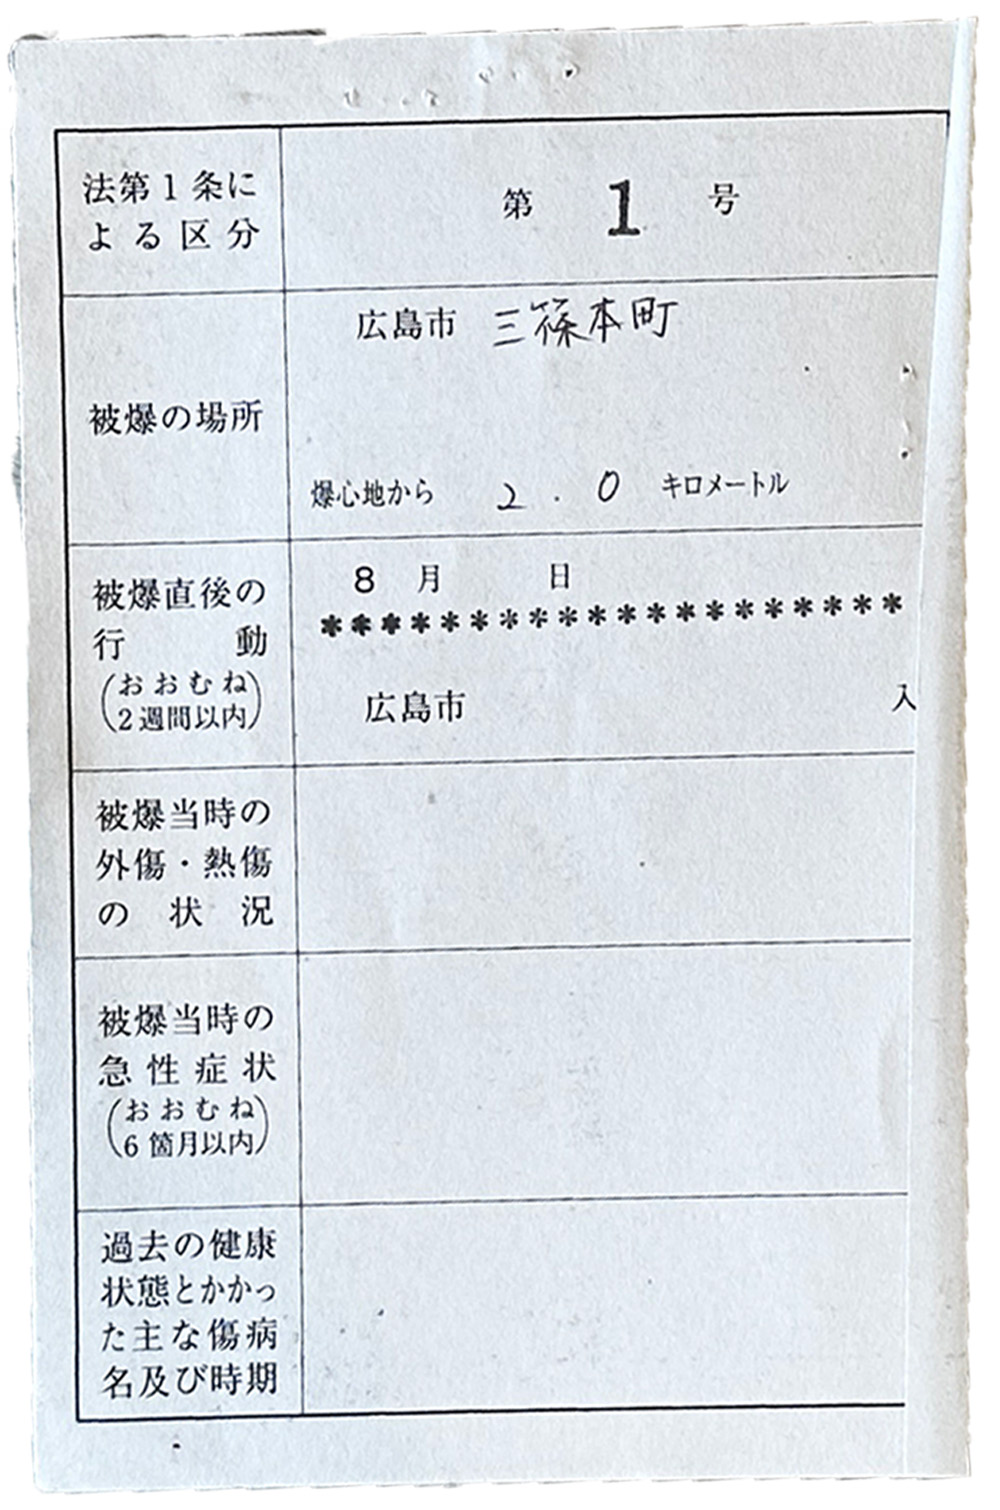 Sadako's certificate